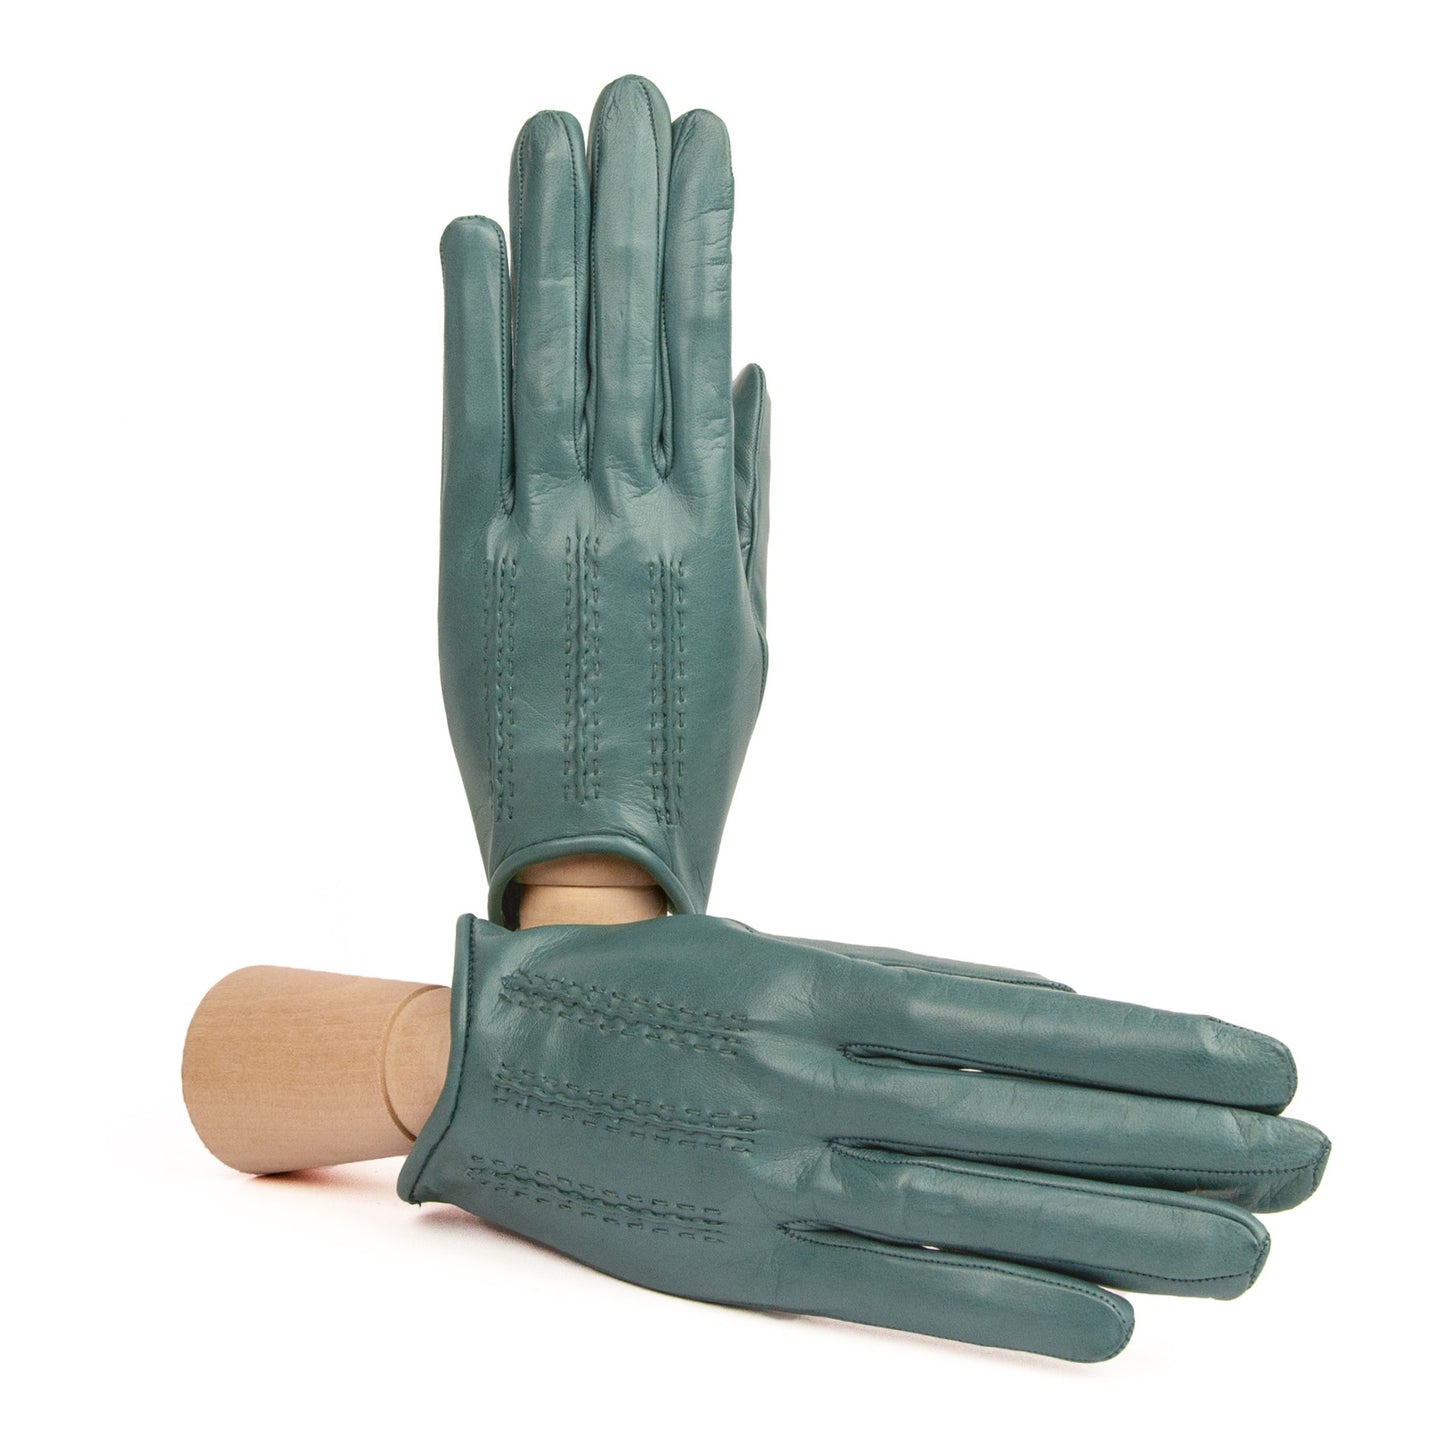 Women's unlined green jade spring gloves